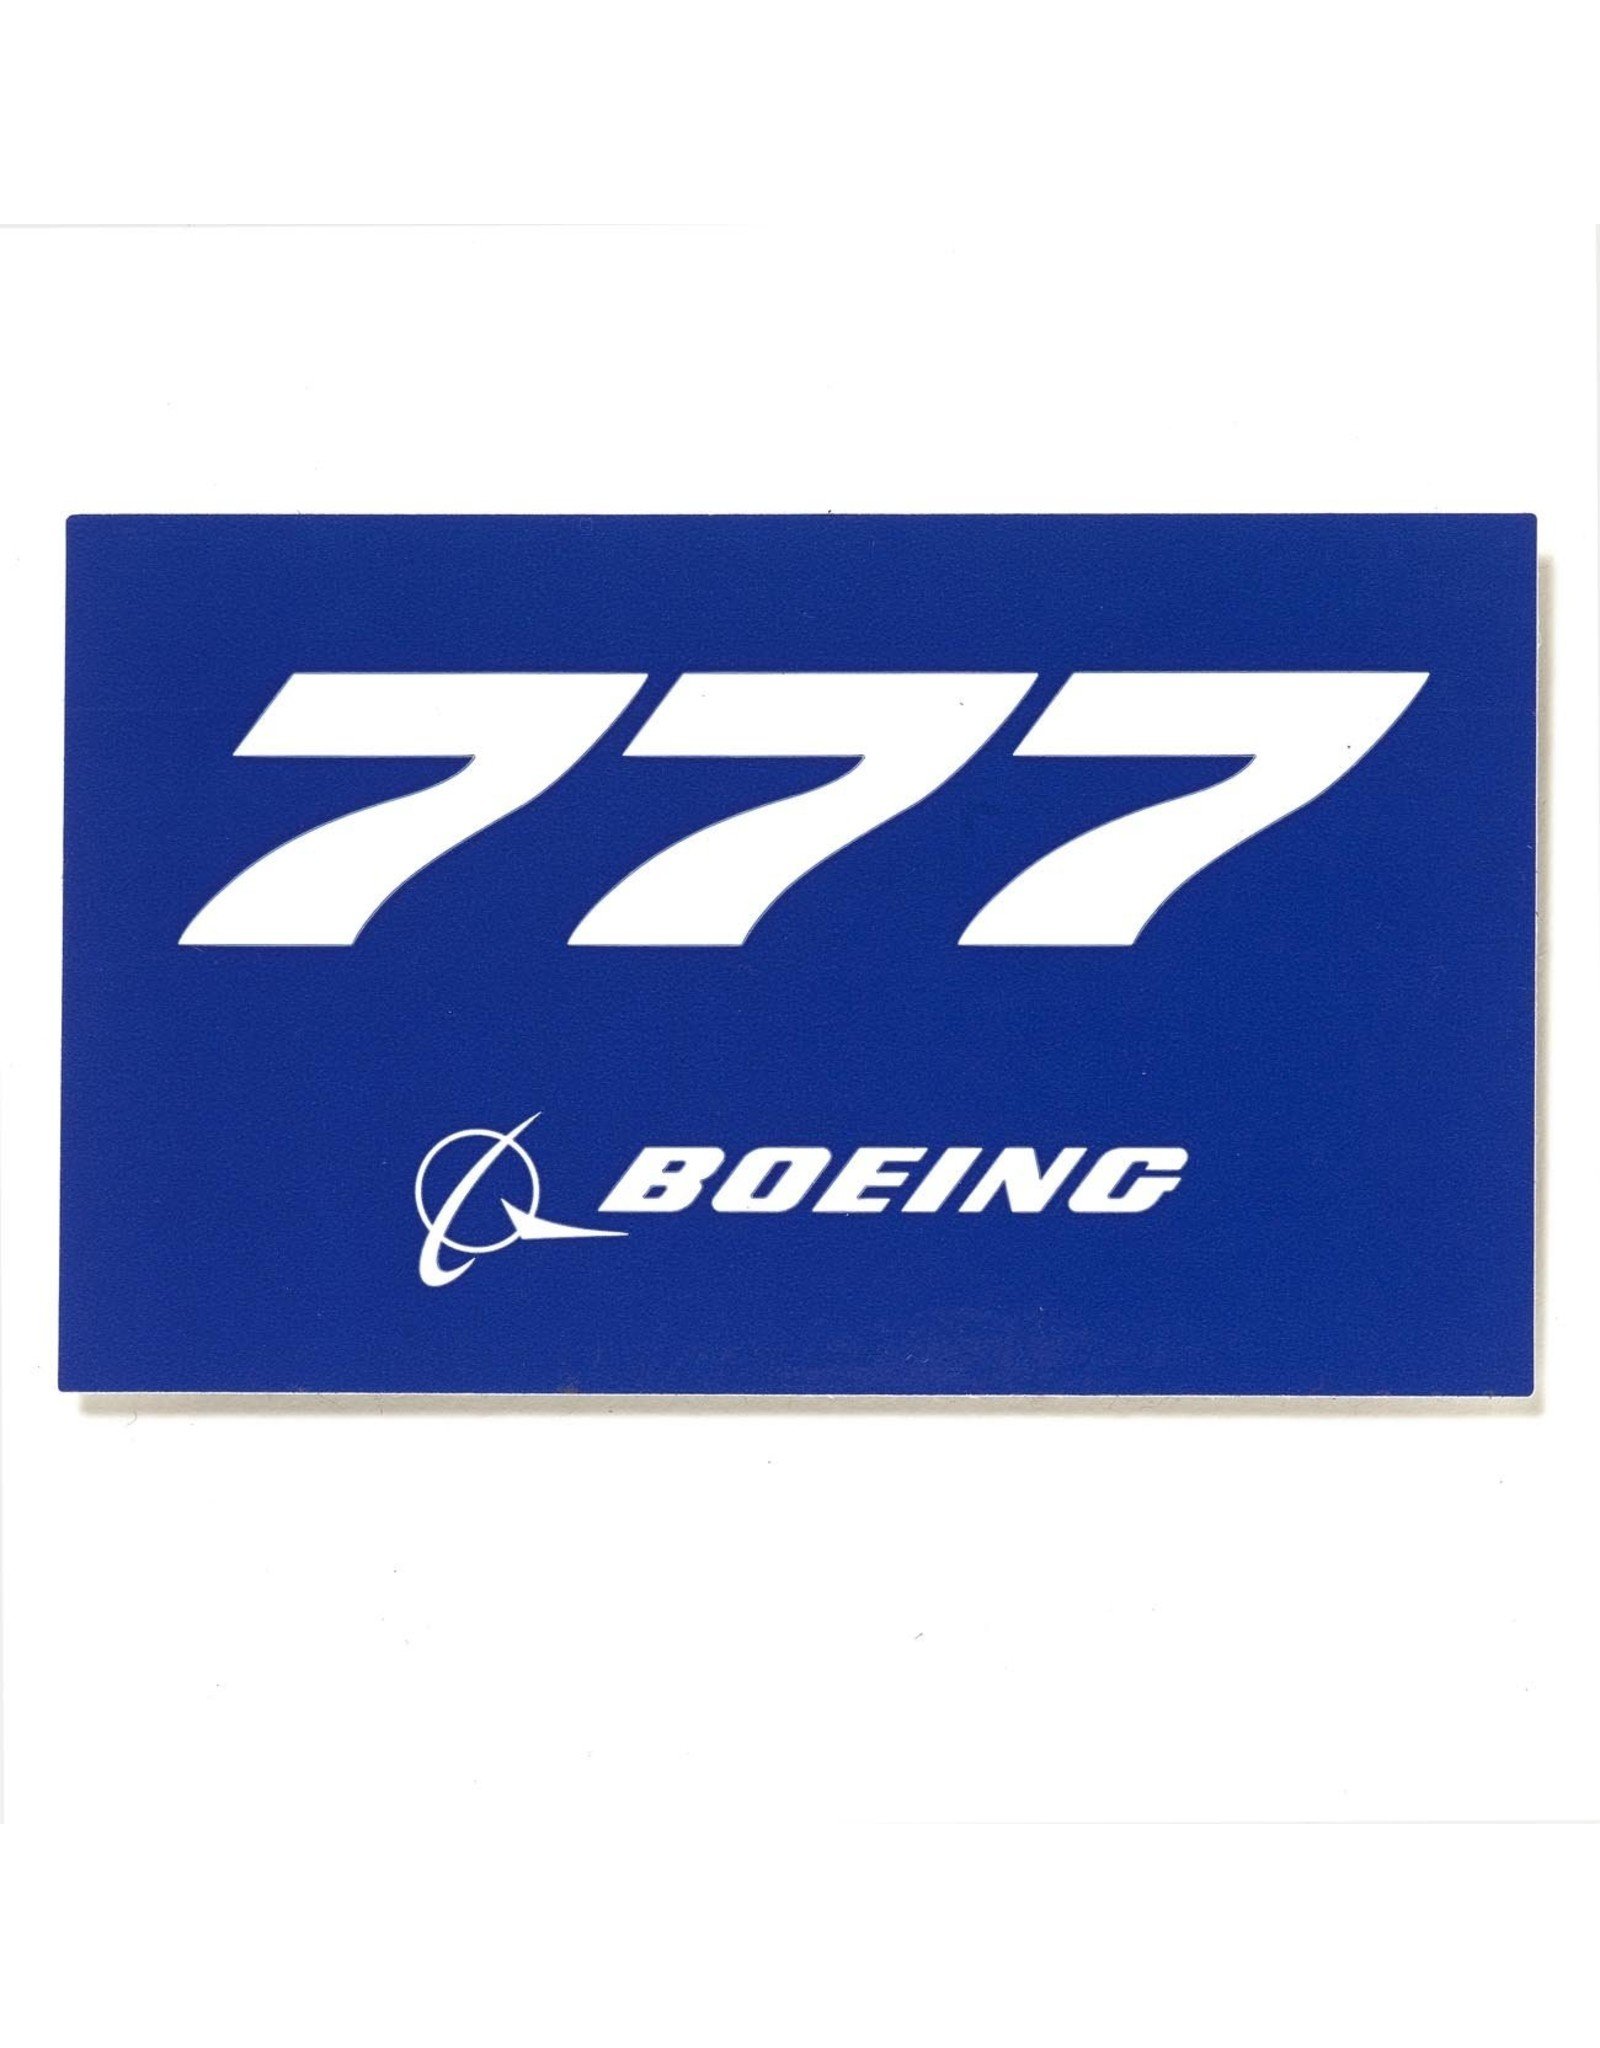 Sticker 777 rectangle